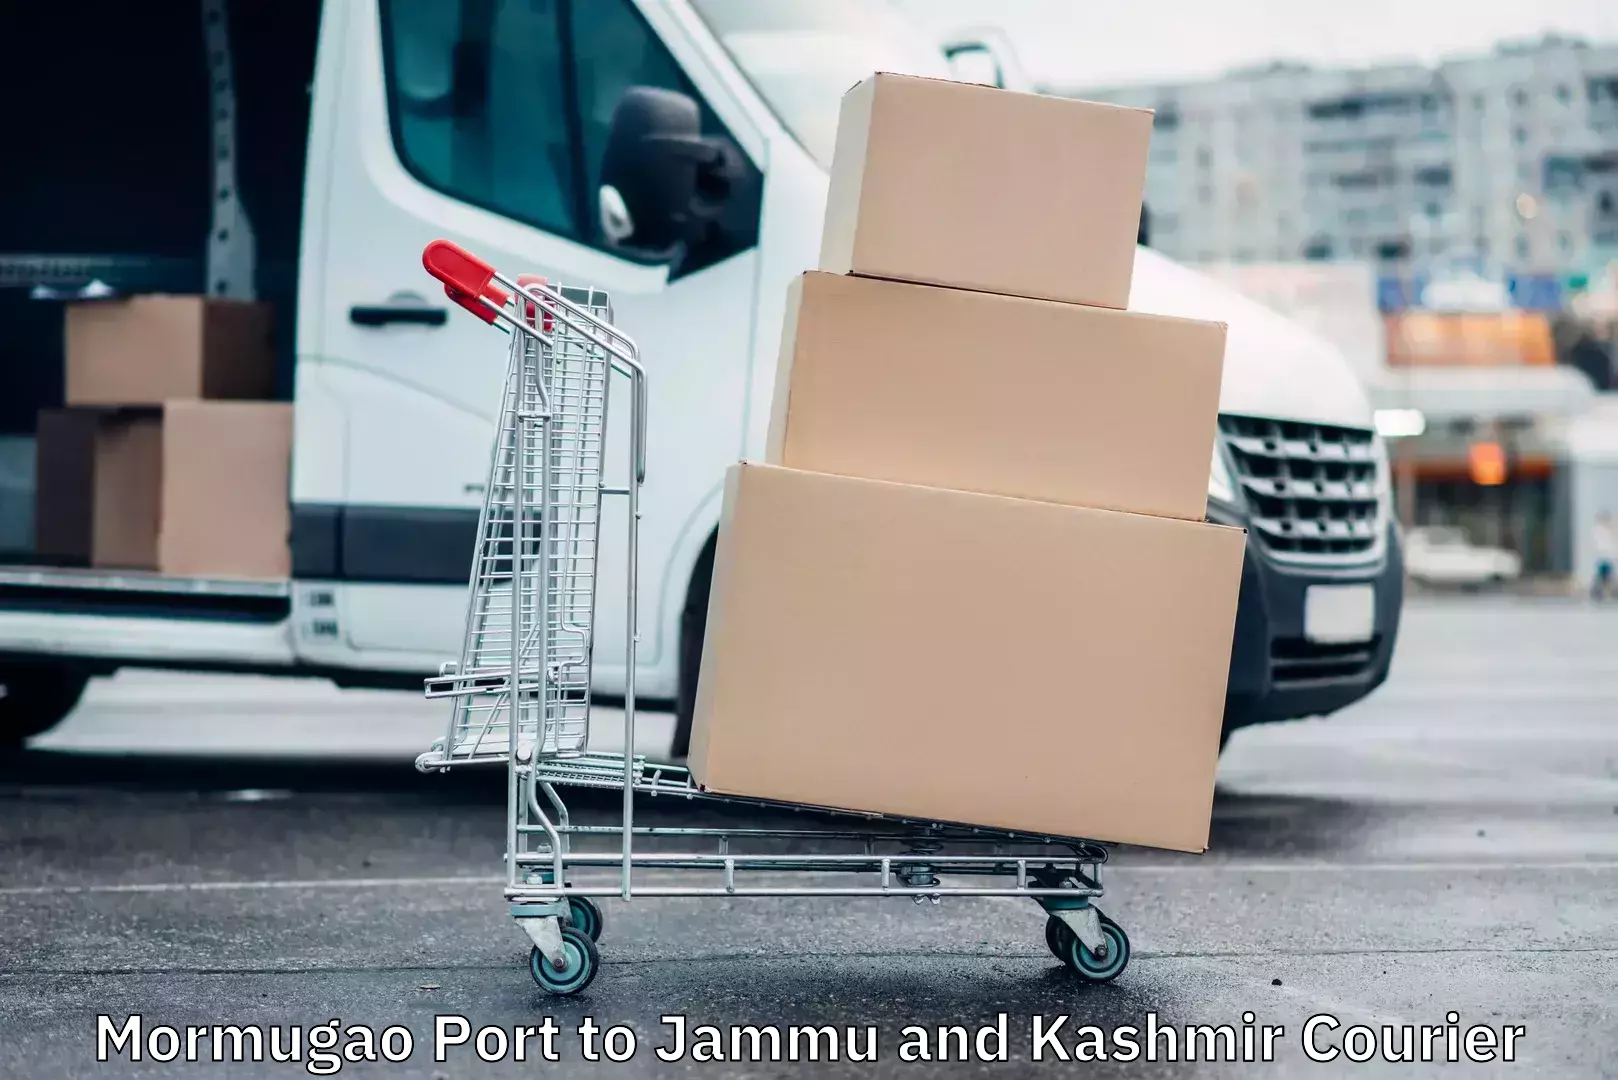 Ocean freight courier Mormugao Port to Jammu and Kashmir